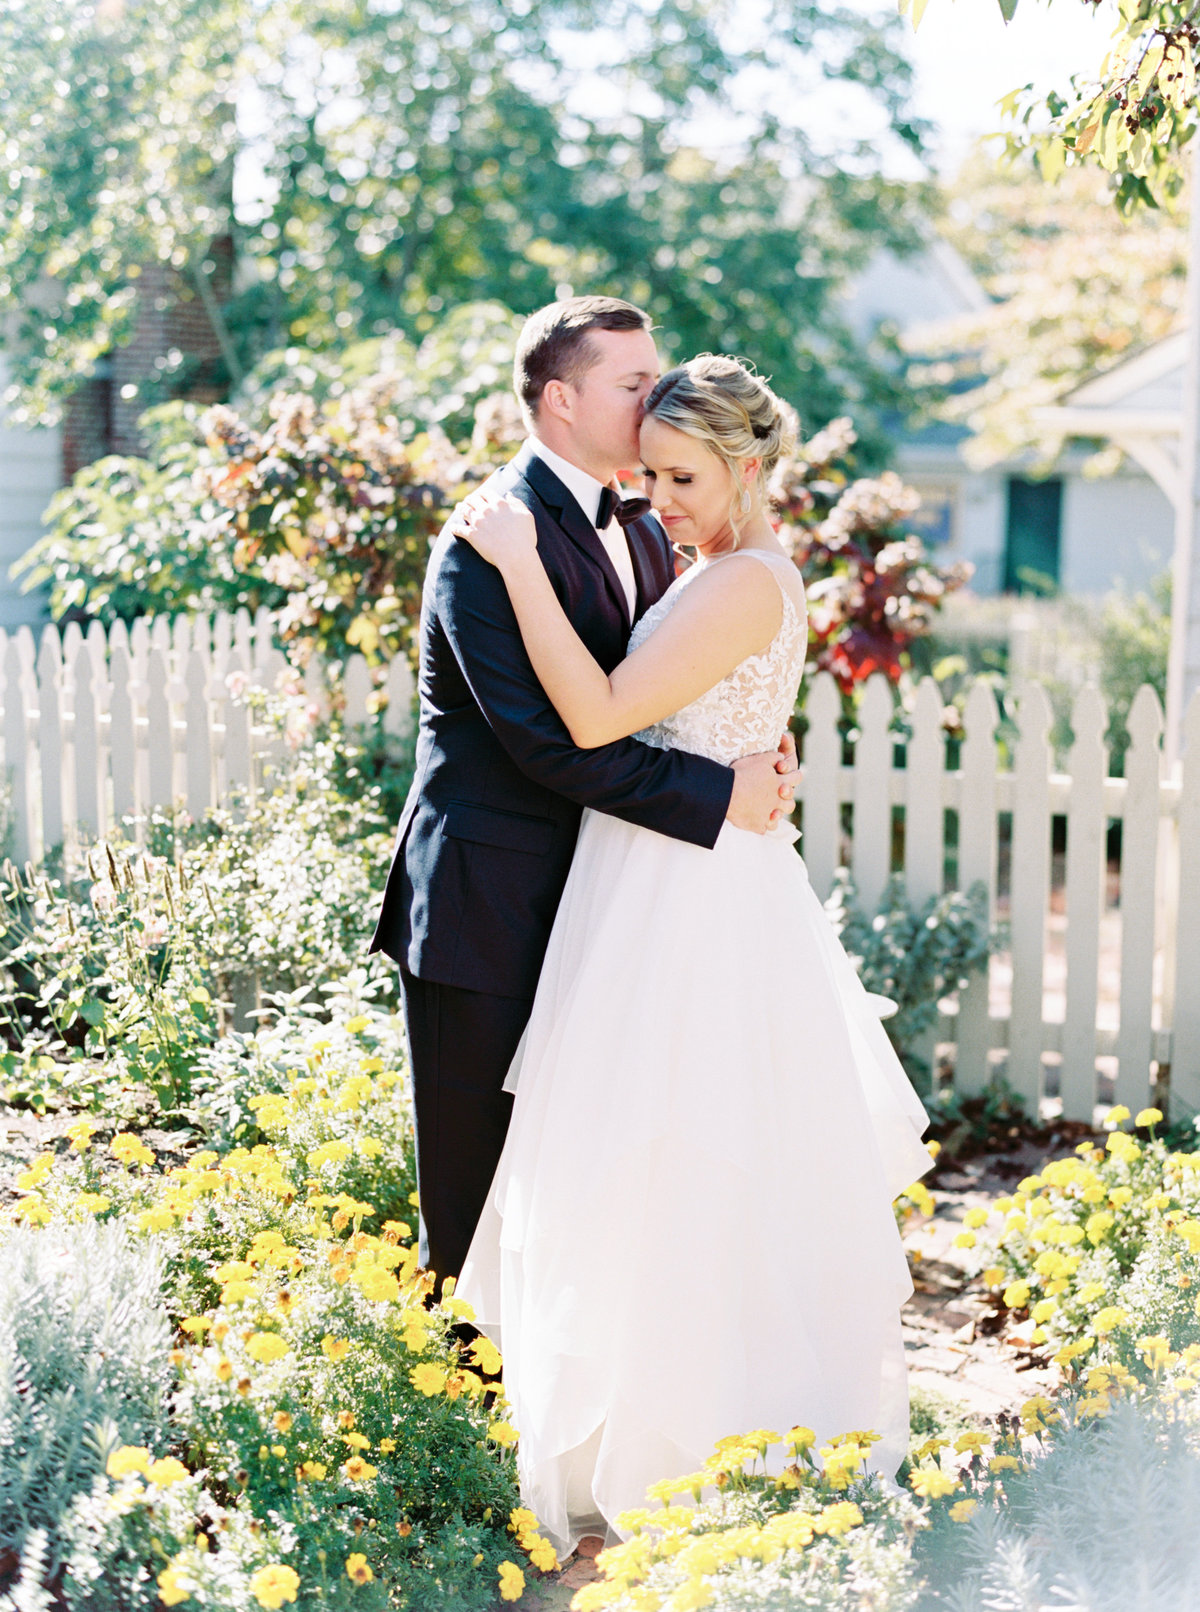 Easton_Maryland-fall-backyard-wedding-photographer-Richmond-natalie-jayne-photography-image-07